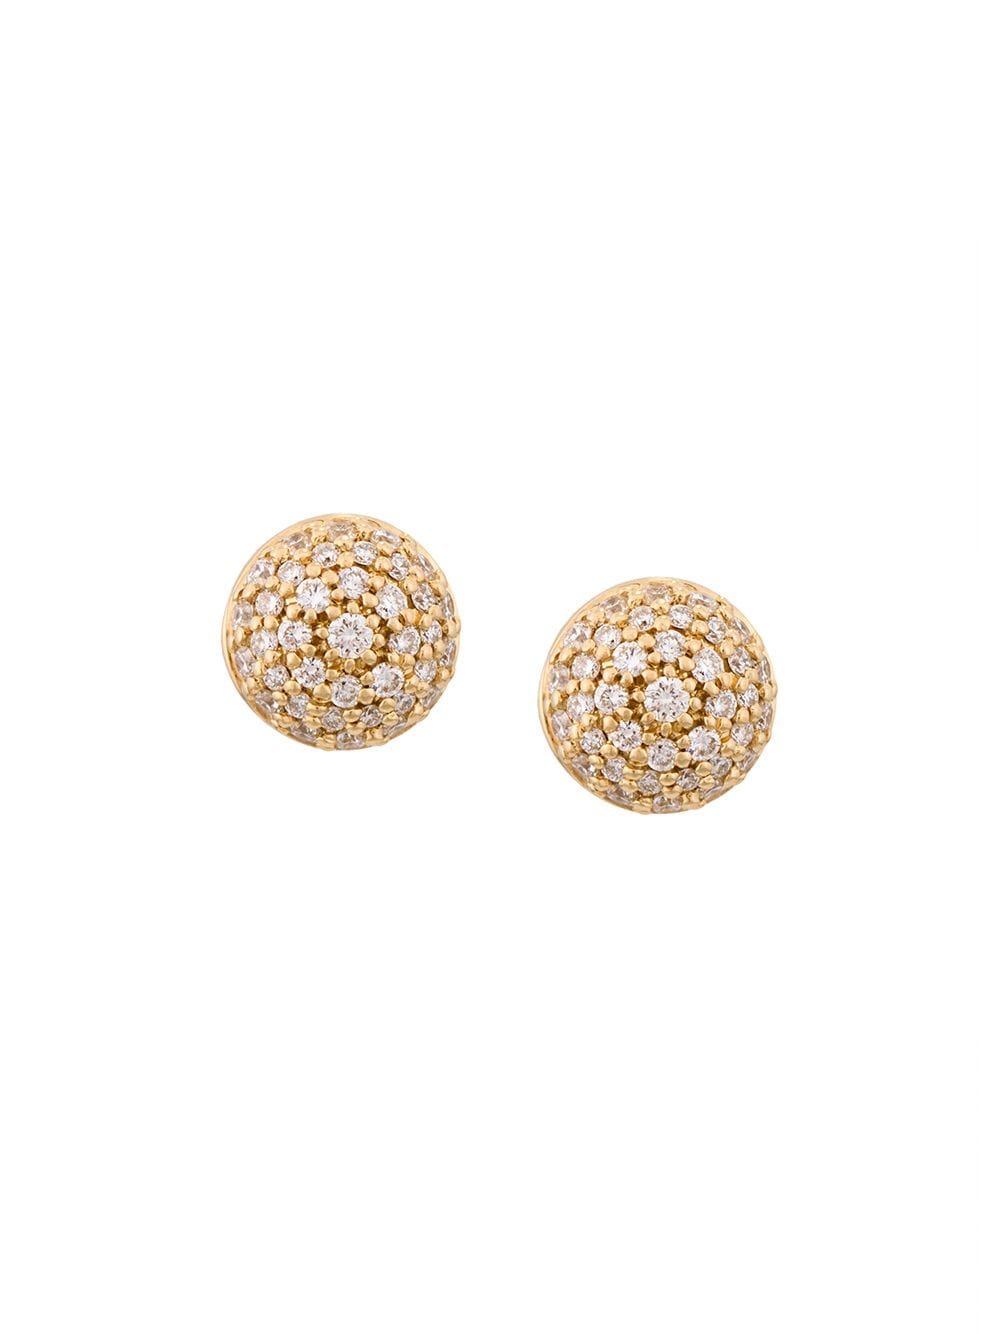 ALINKA 18kt yellow gold Black Caviar diamond stud earrings - Metallic von ALINKA